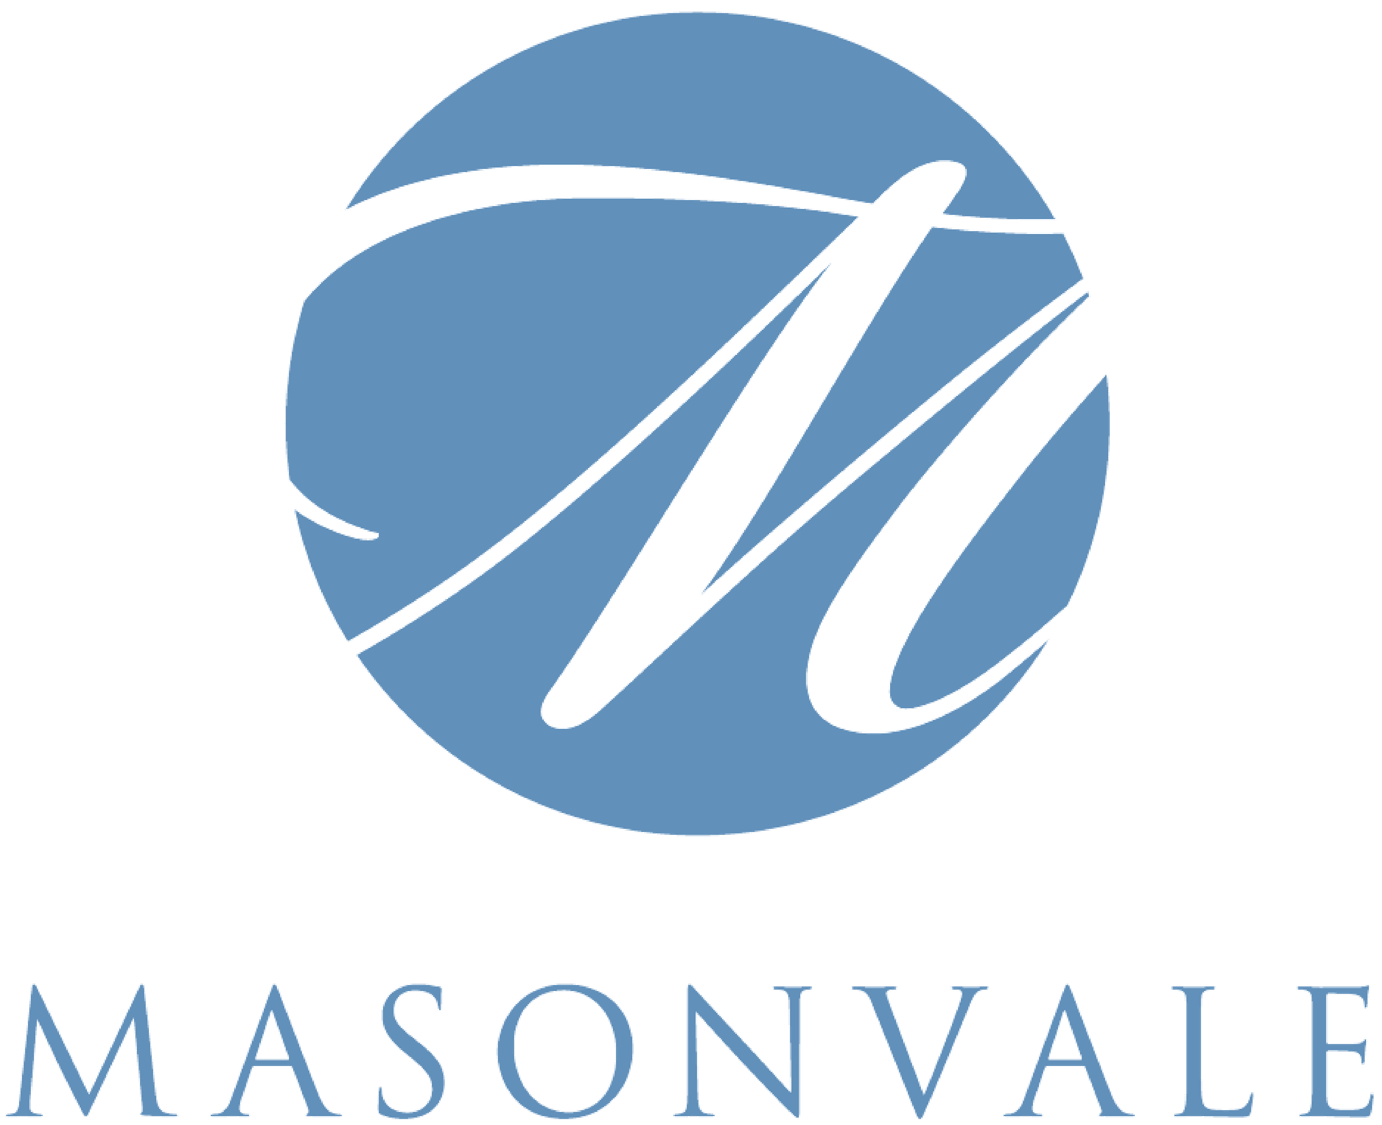 Masonvale